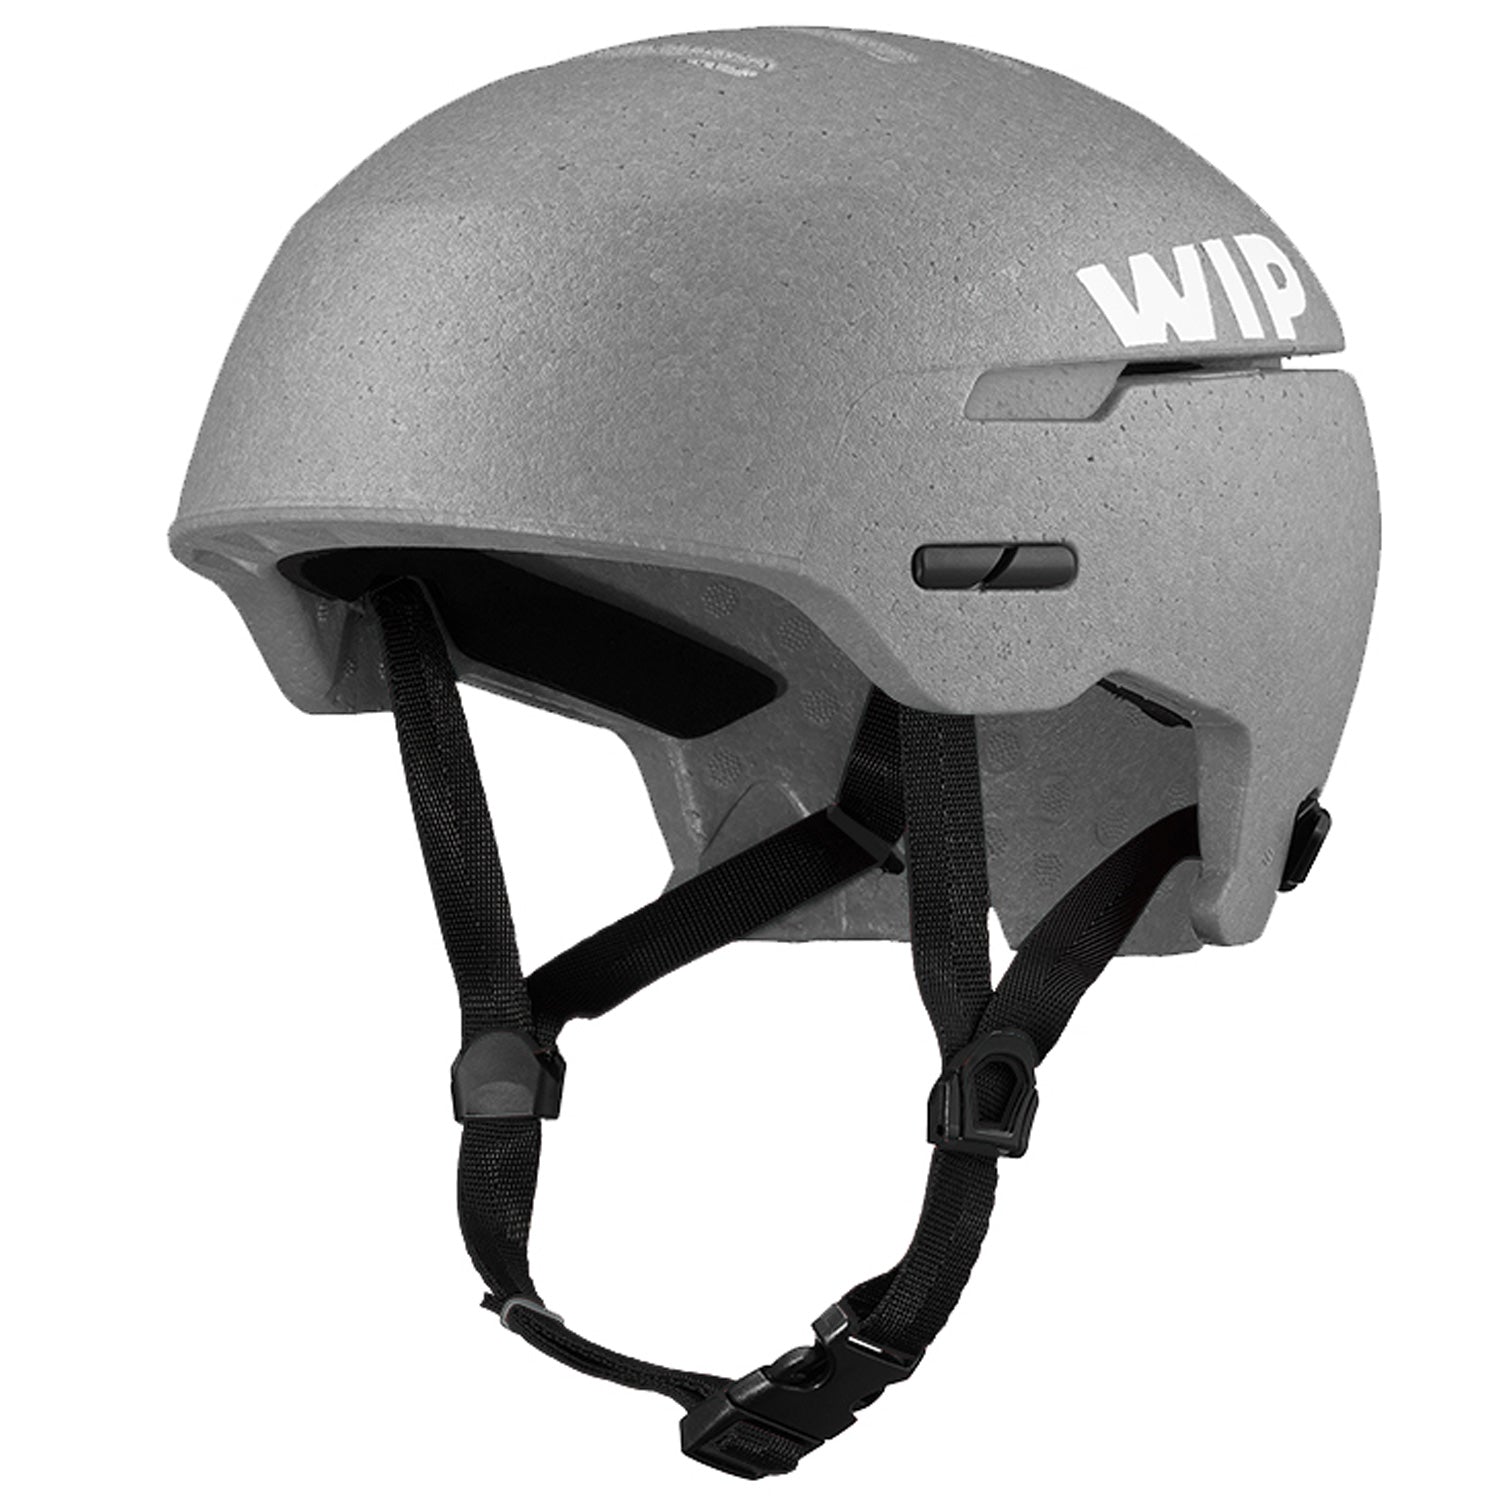 Forward WIP Wiflex Safety Helmet